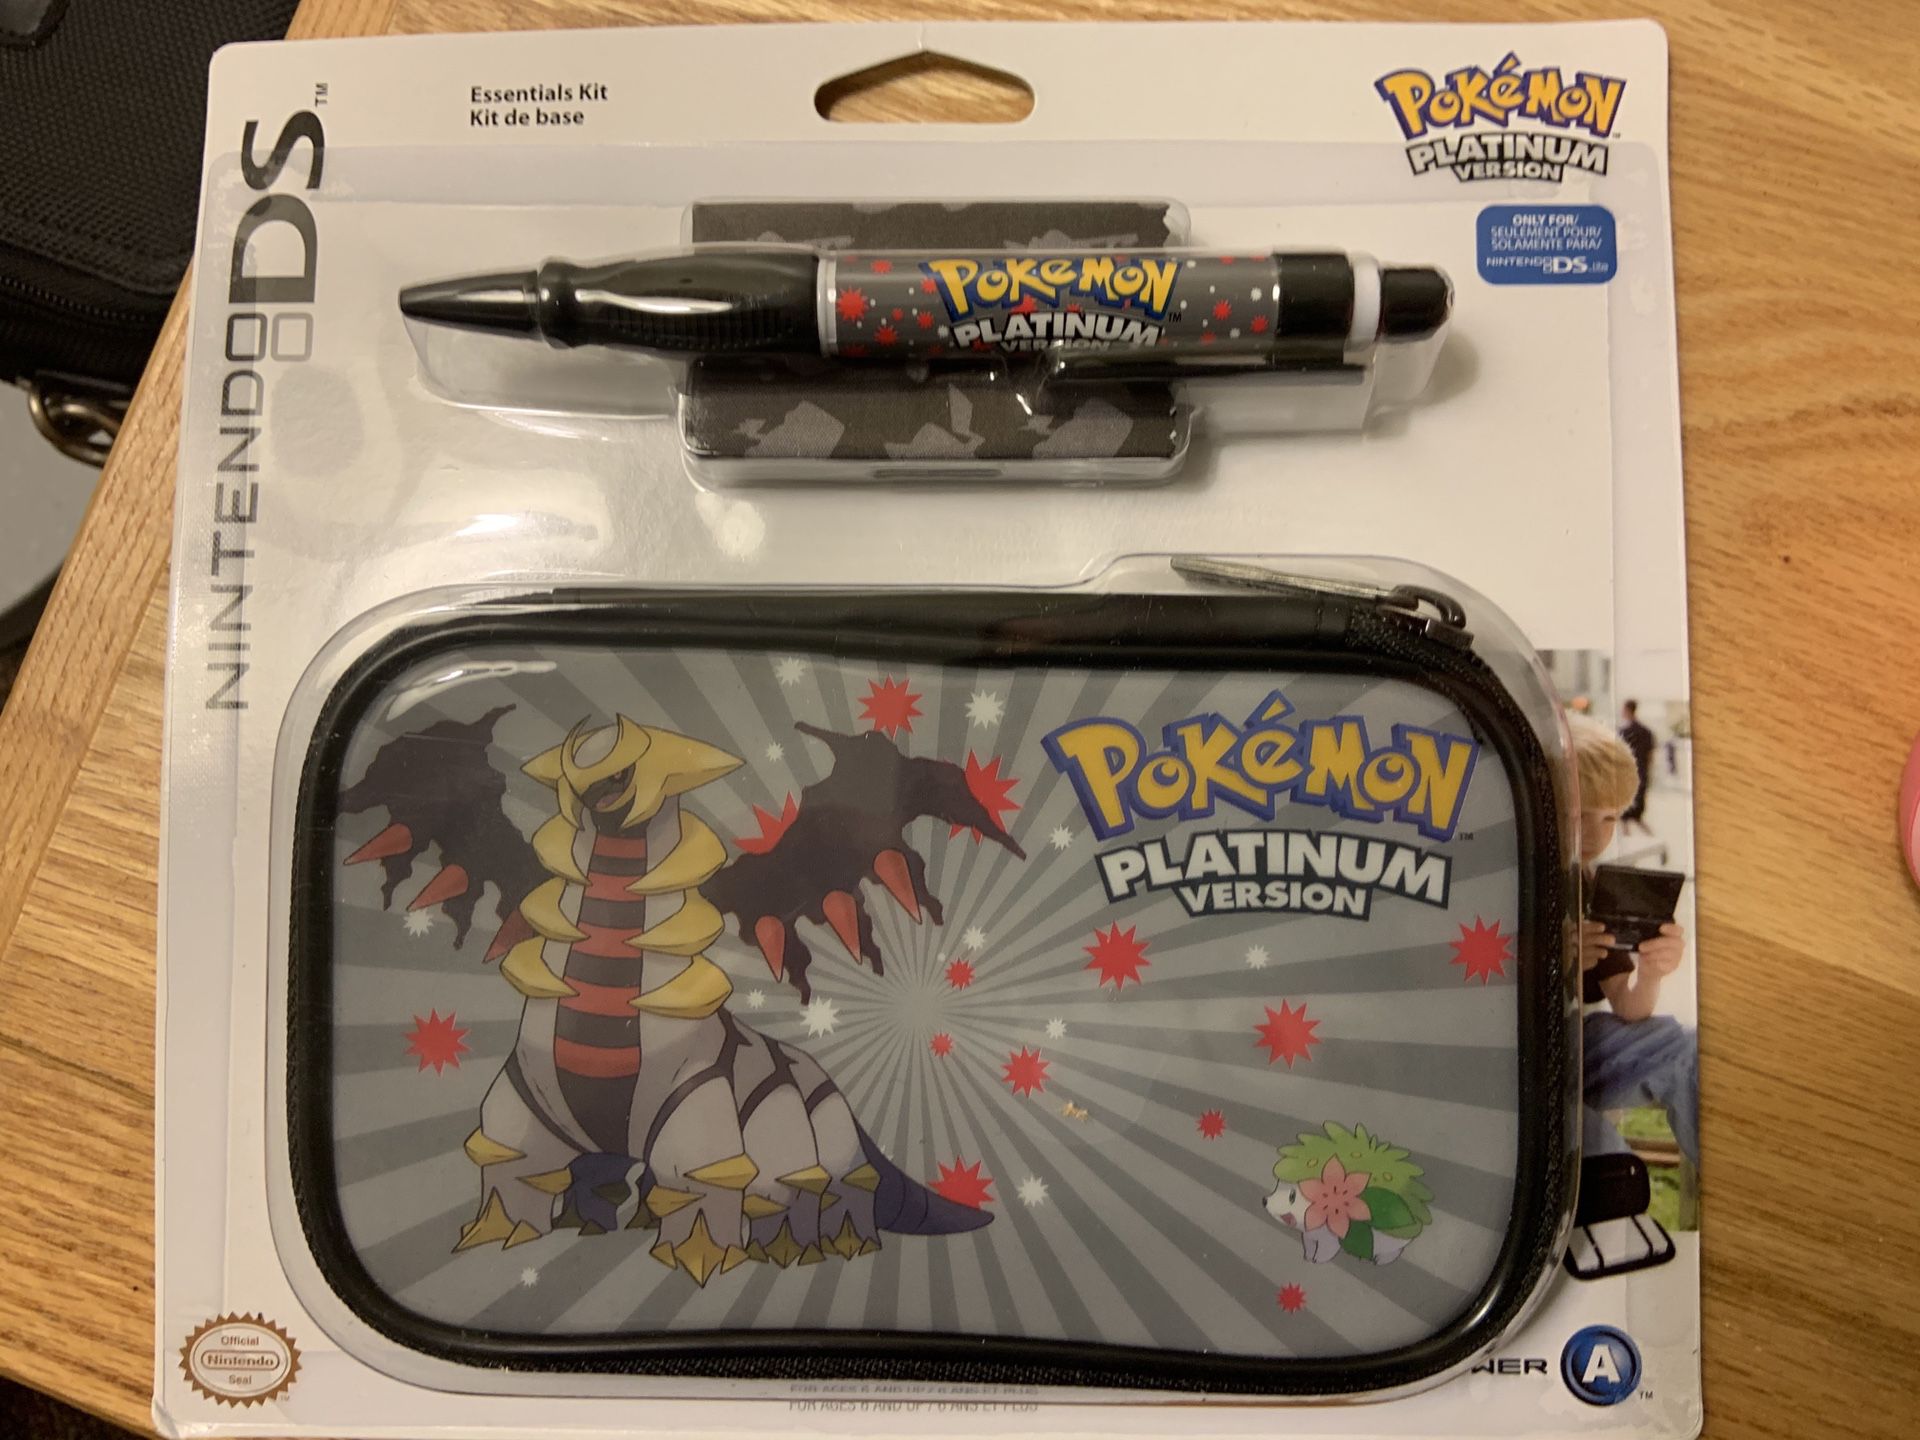 Pokémon platinum Nintendo DS light starter kit